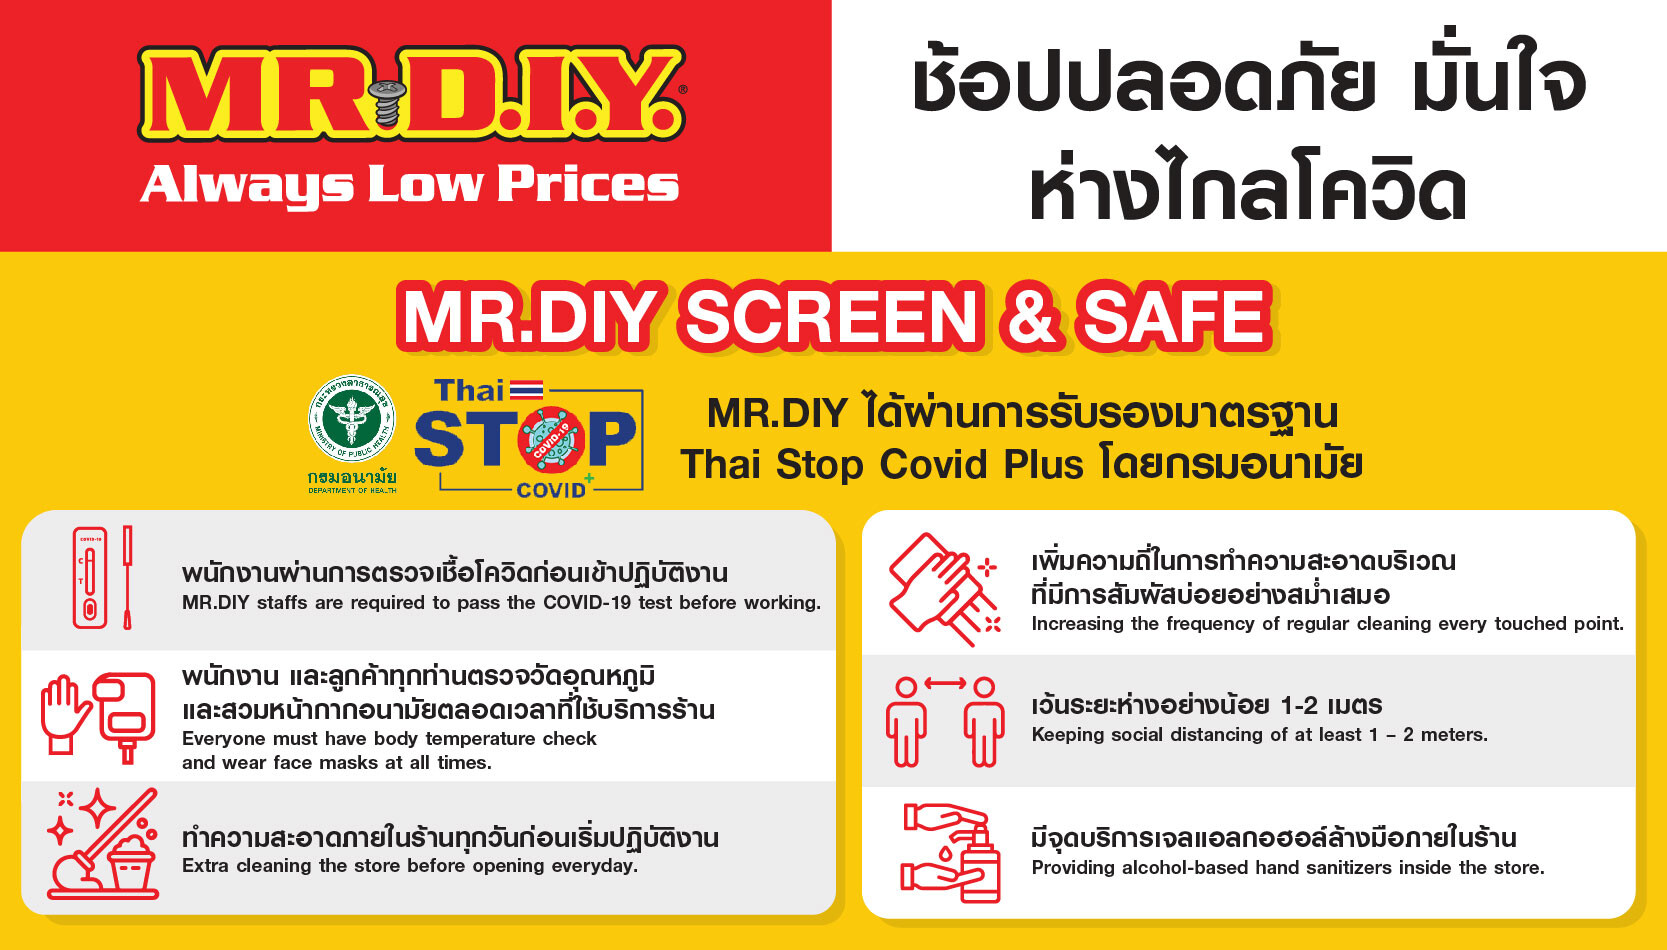 MR.DIY "Screen & Safe" เสริมความมั่นใจให้กับลูกค้า ตามมาตรการ Thai Stop Covid Plus